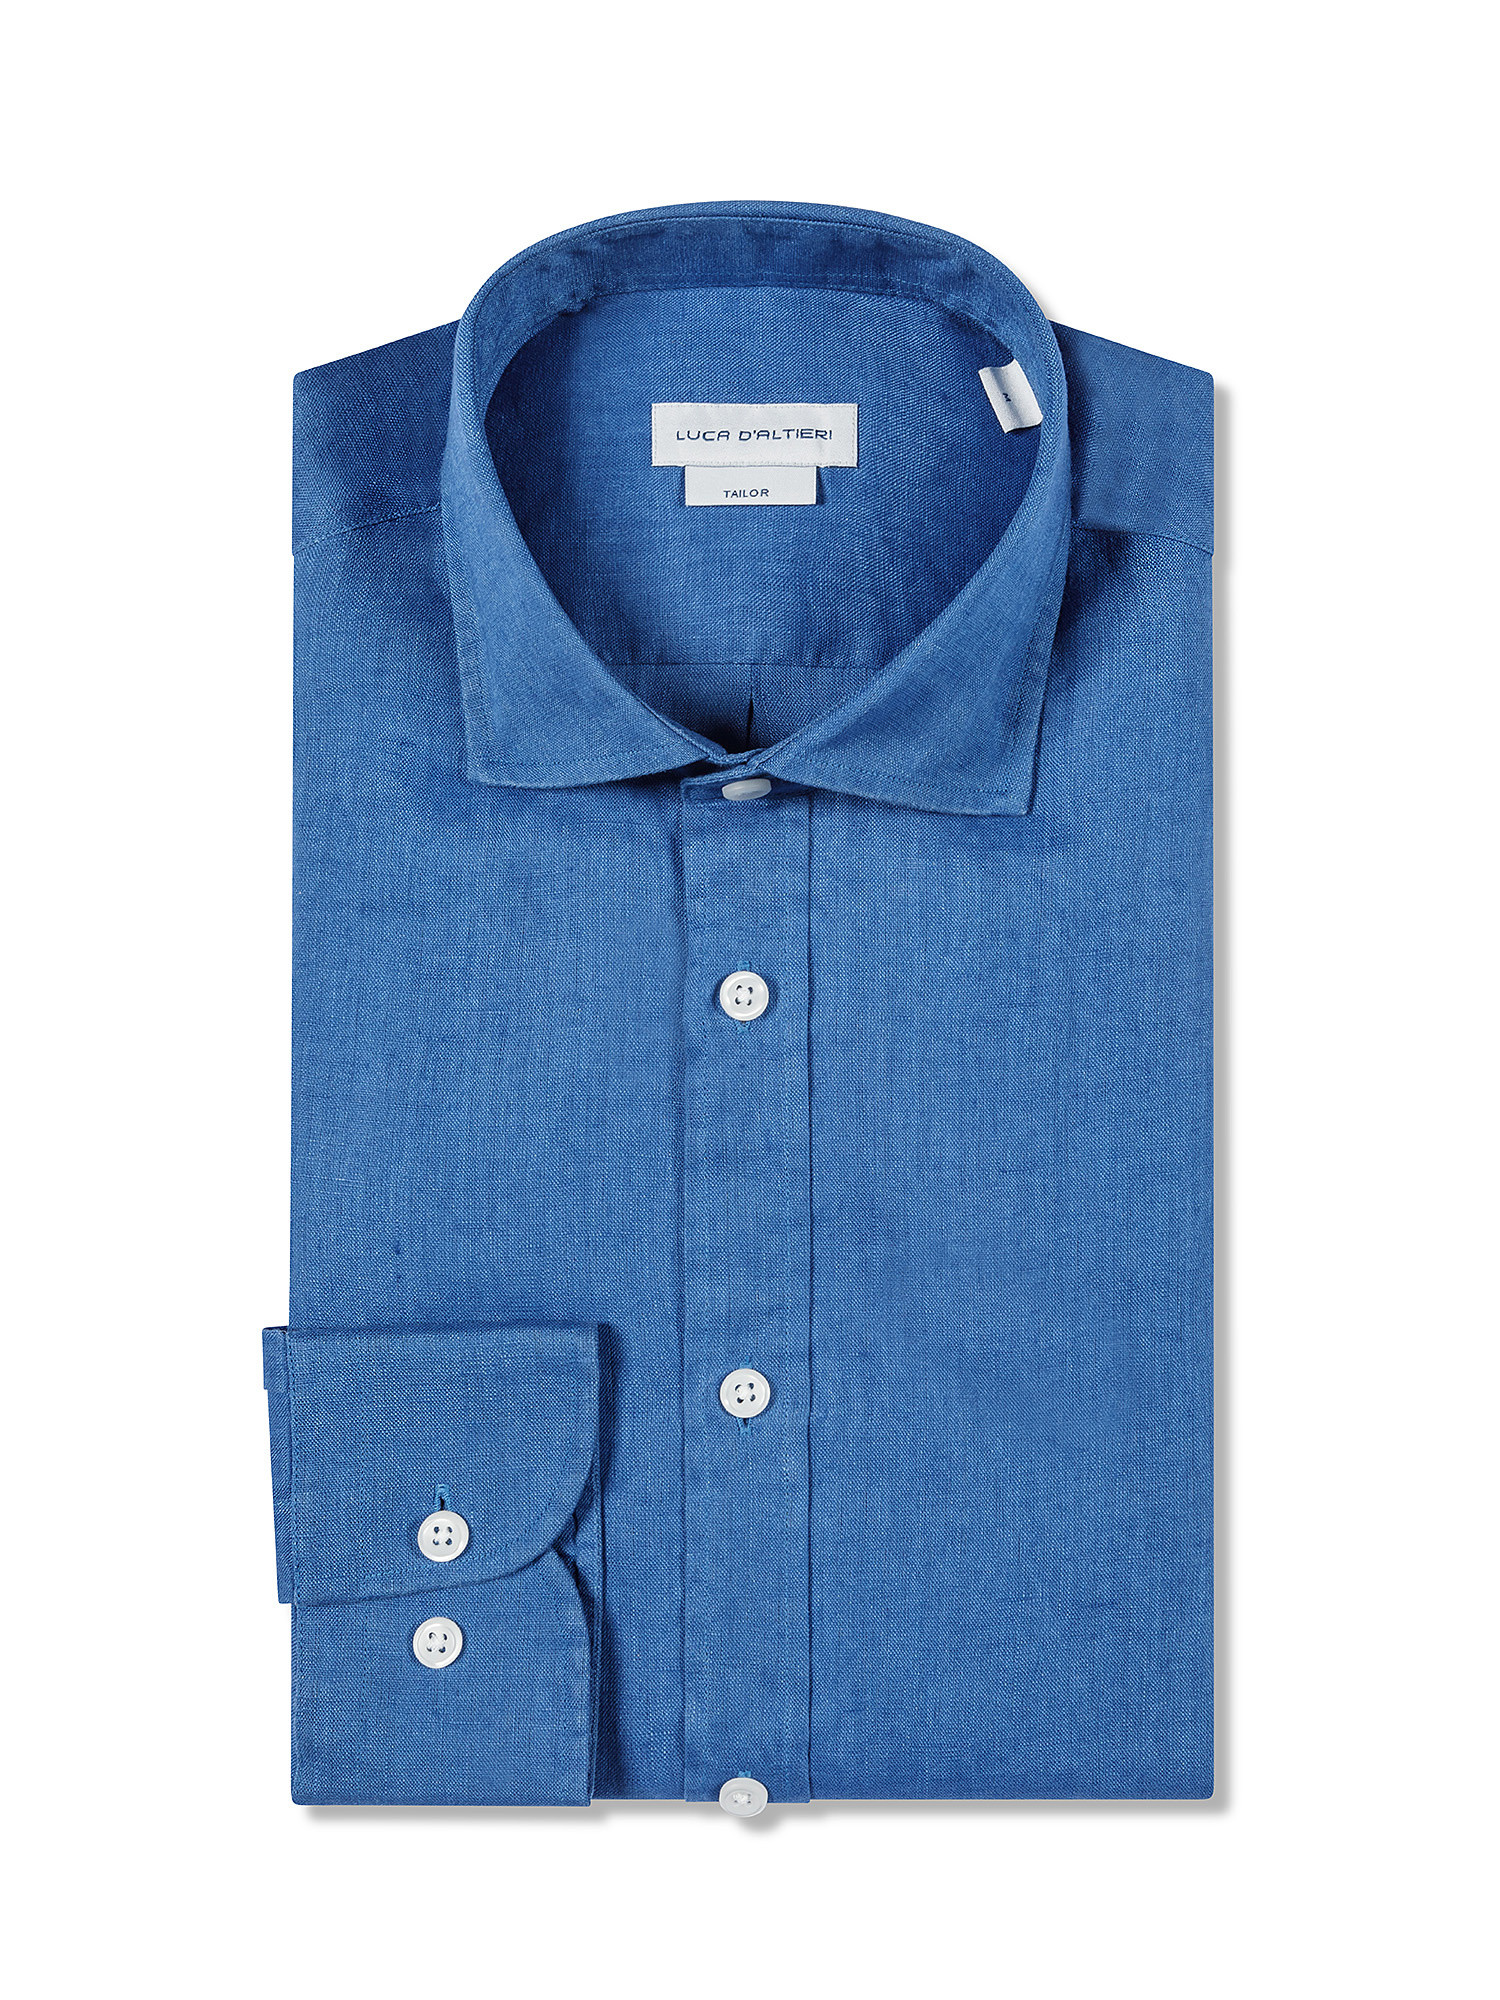 Luca D'Altieri - Camicia tailor fit in puro lino, Blu bluette, large image number 2